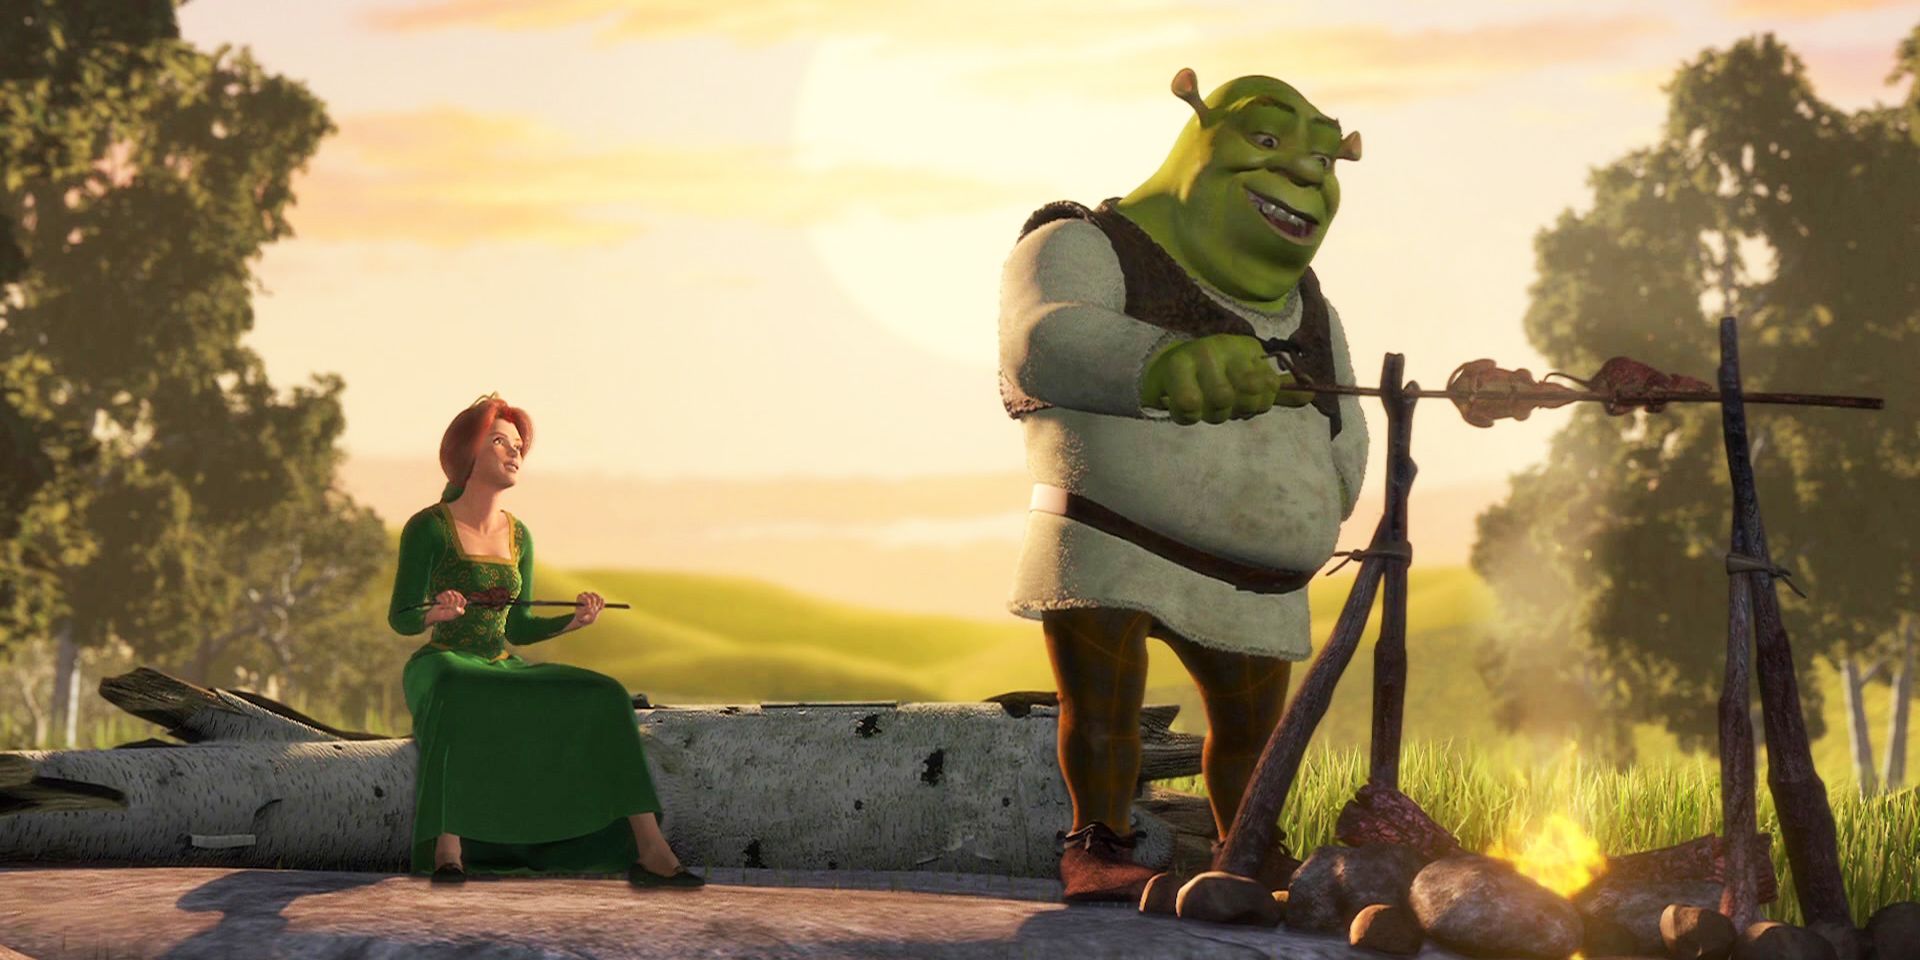 Shrek Fiona and Shrek dinning at their camp